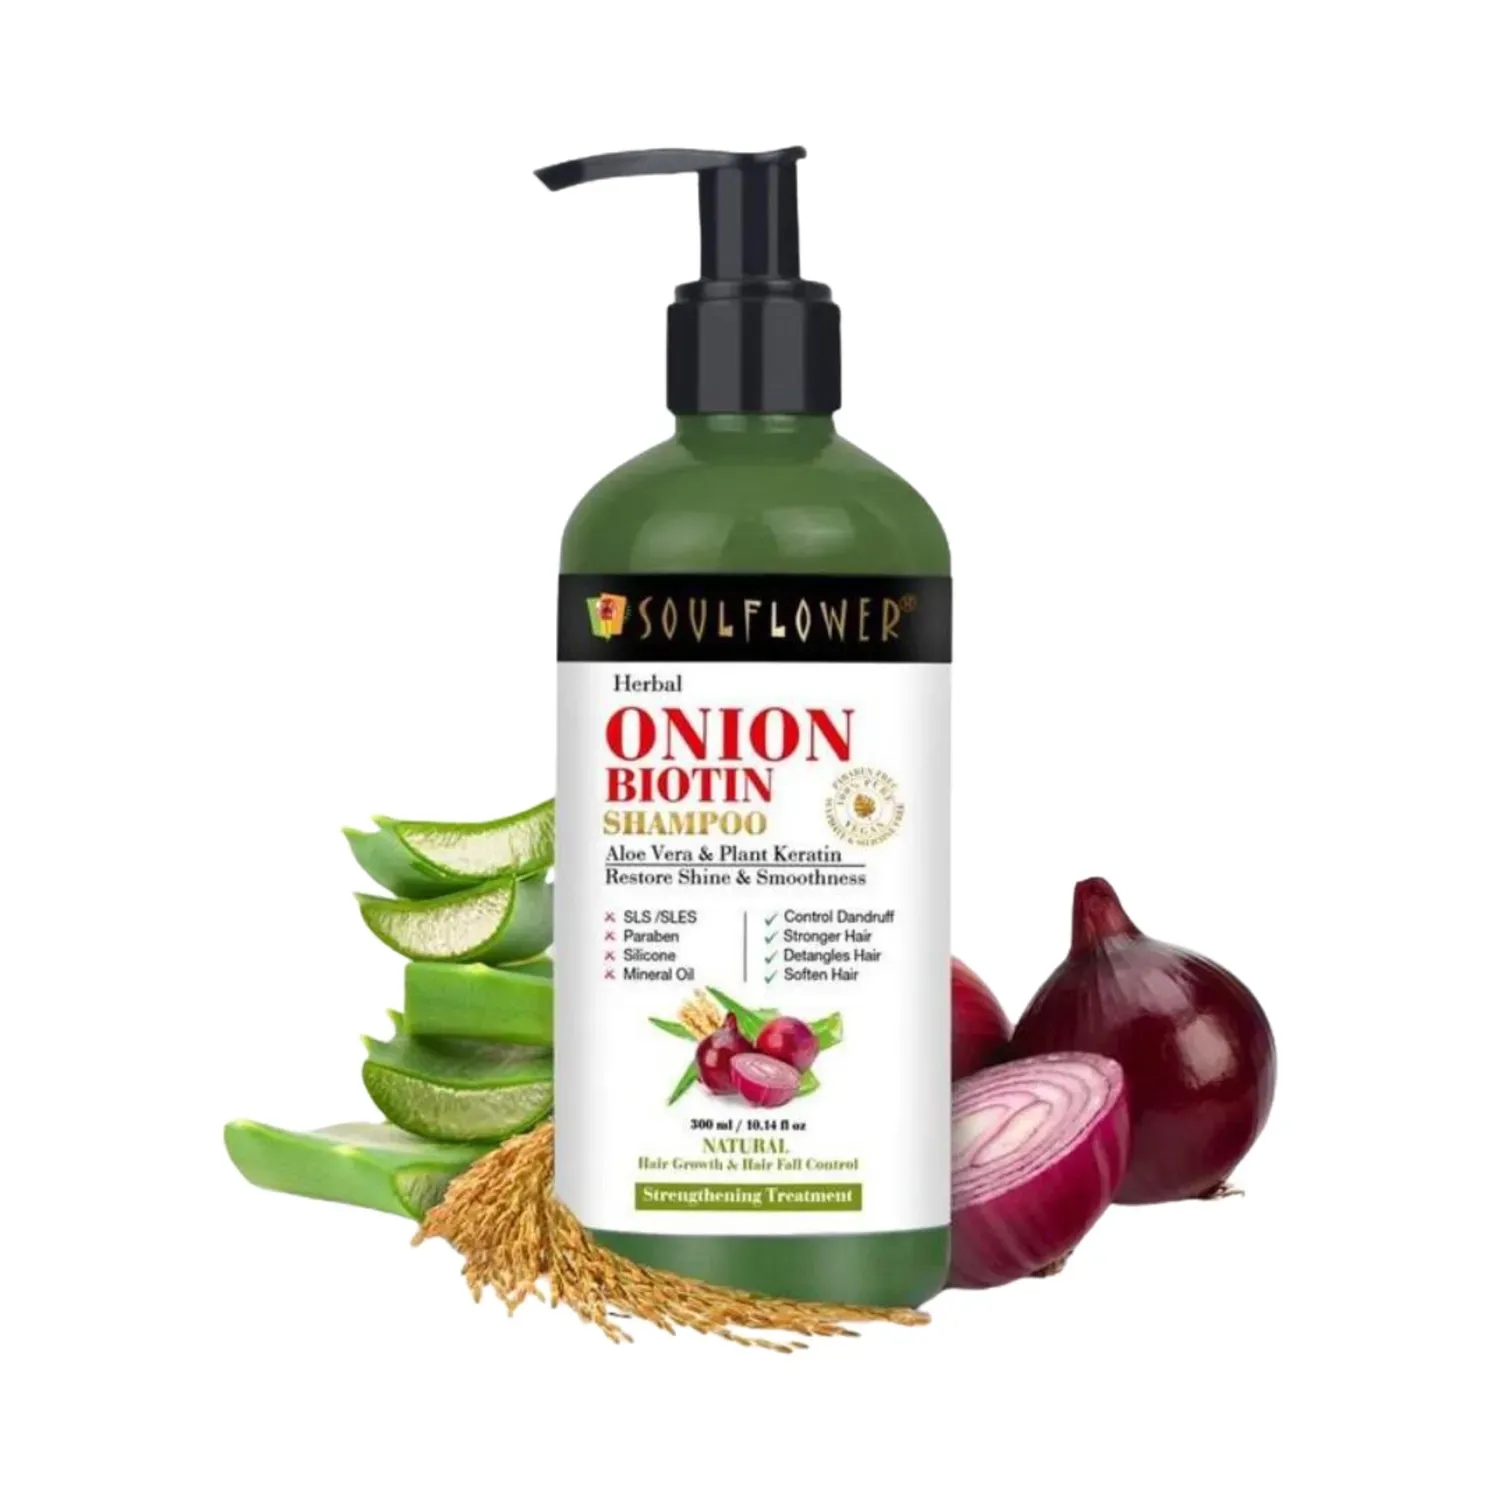 Soulflower | Soulflower Onion Biotin Shampoo with Aloe Vera & Plant Keratin - (300ml)